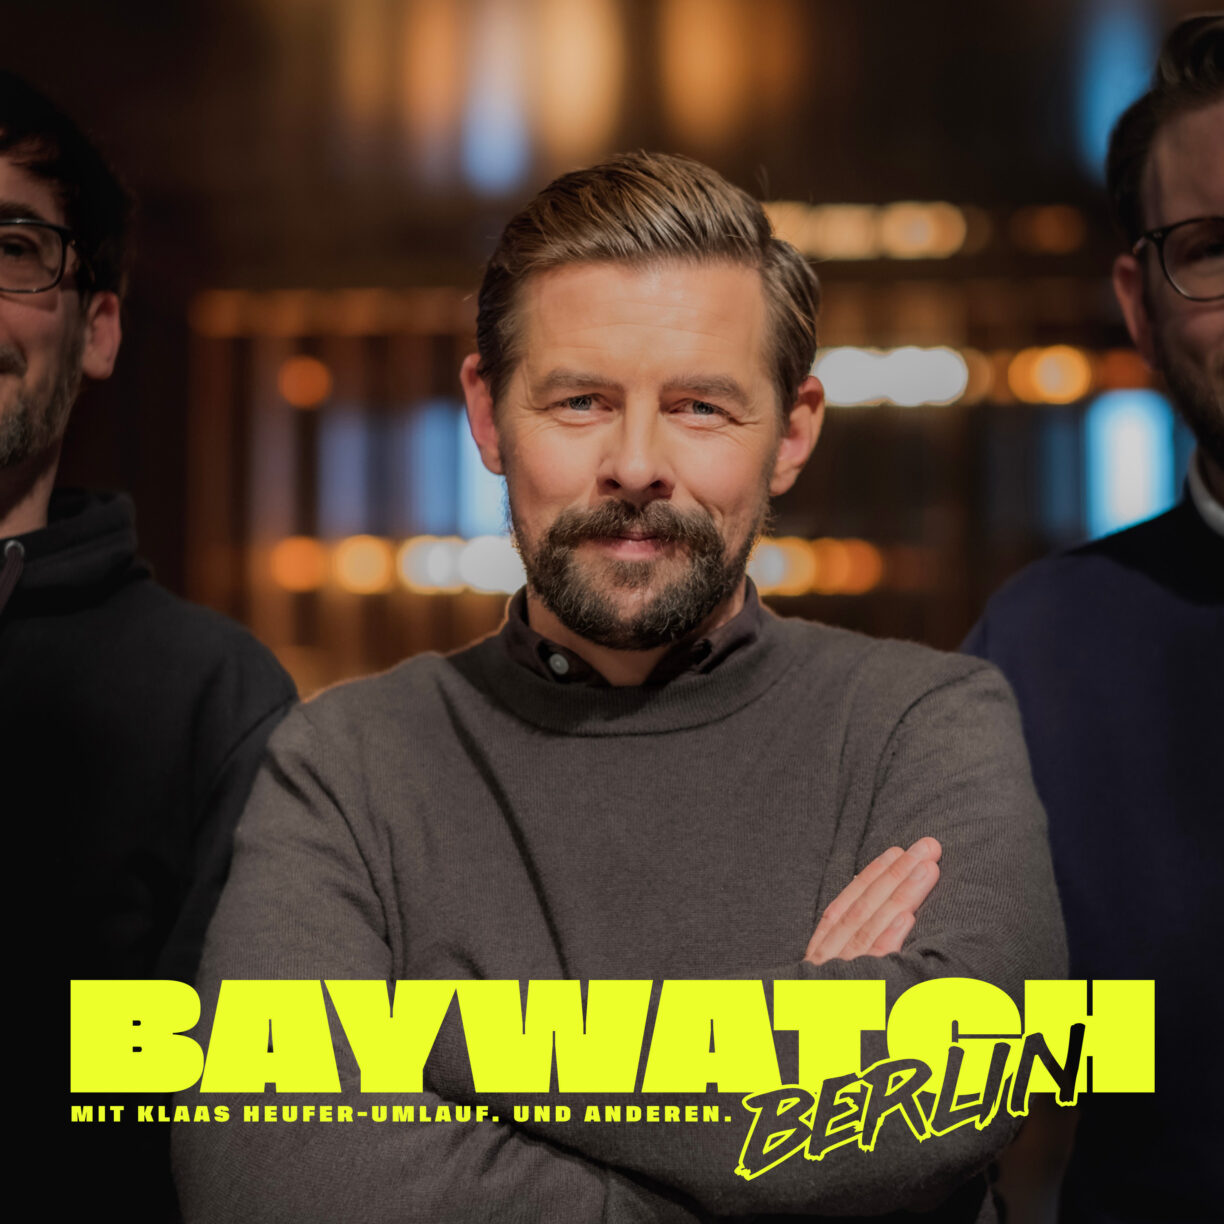 Podcast »Baywatch Berlin« mit Klaas Heufer-Umlauf, Thomas Schmitt & Jakob Lundt (Studio Bummens)